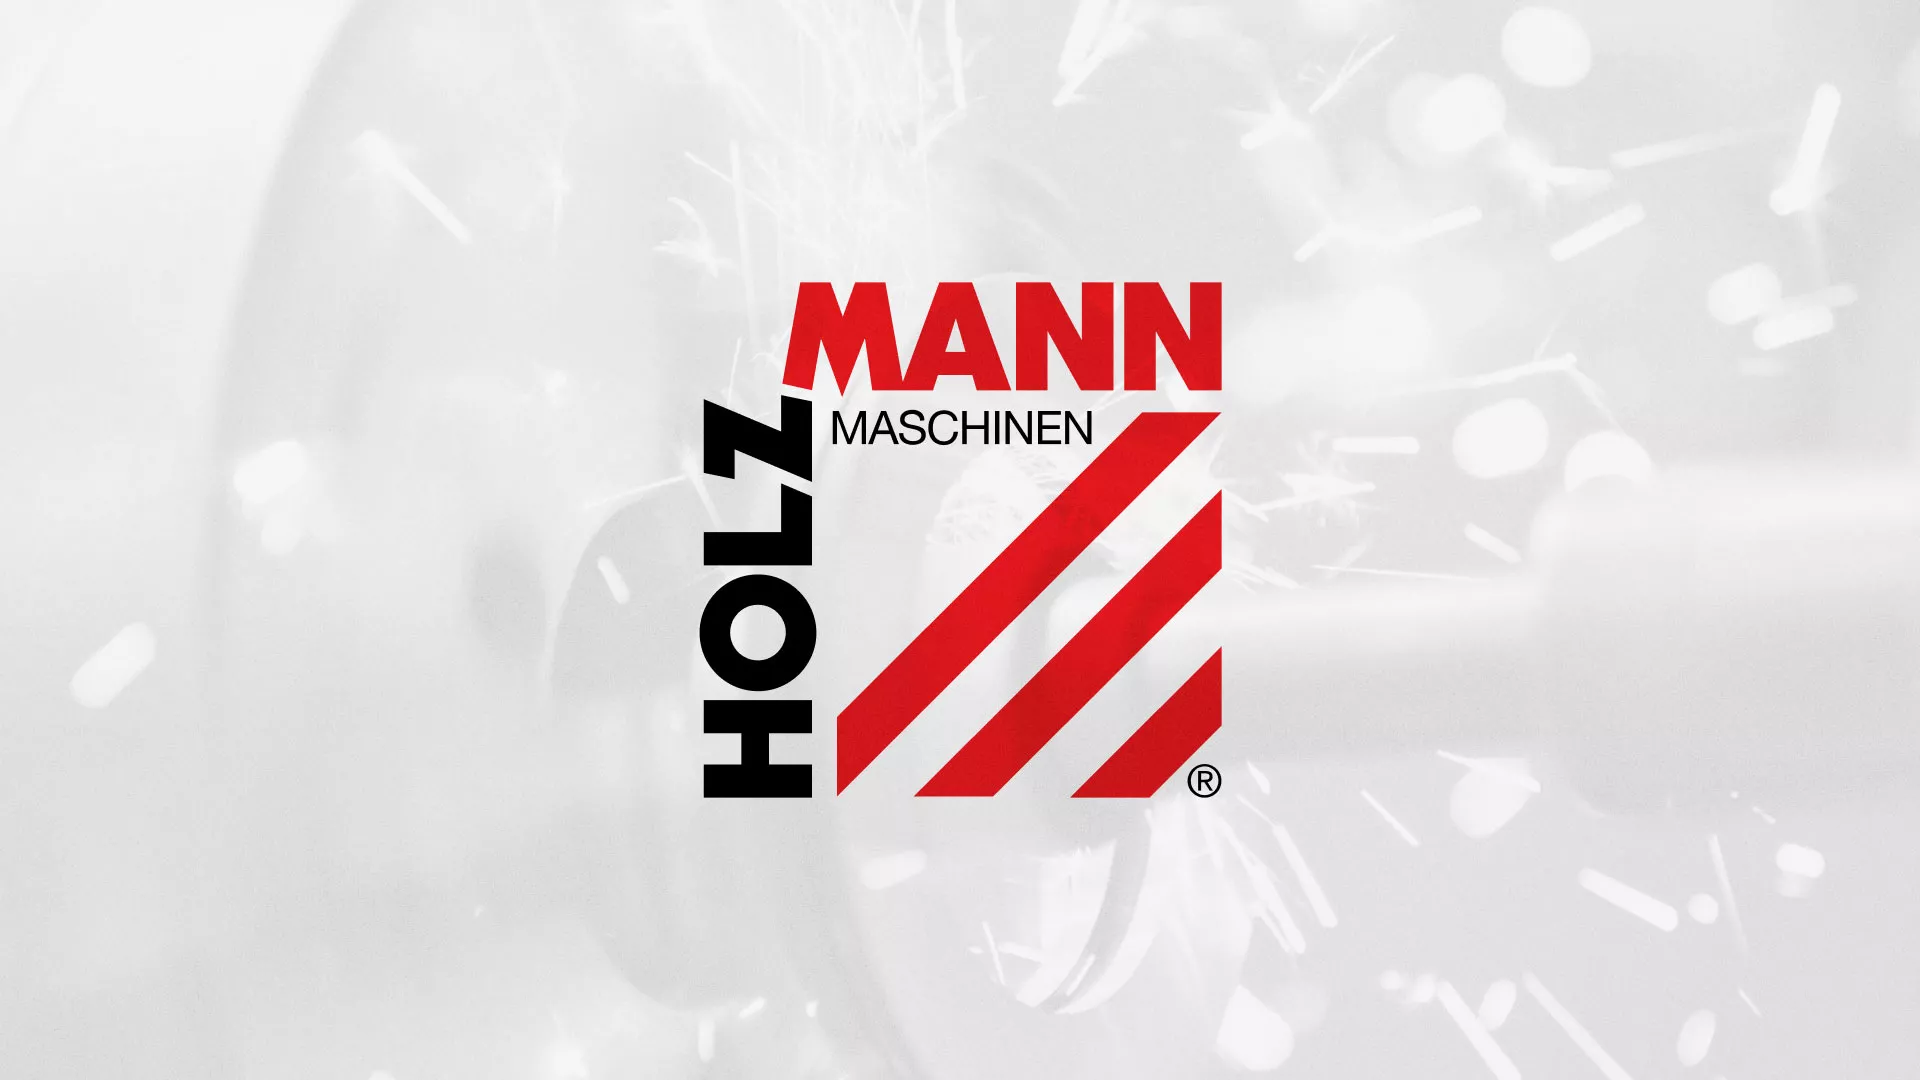 Создание сайта компании «HOLZMANN Maschinen GmbH» в Пушкино